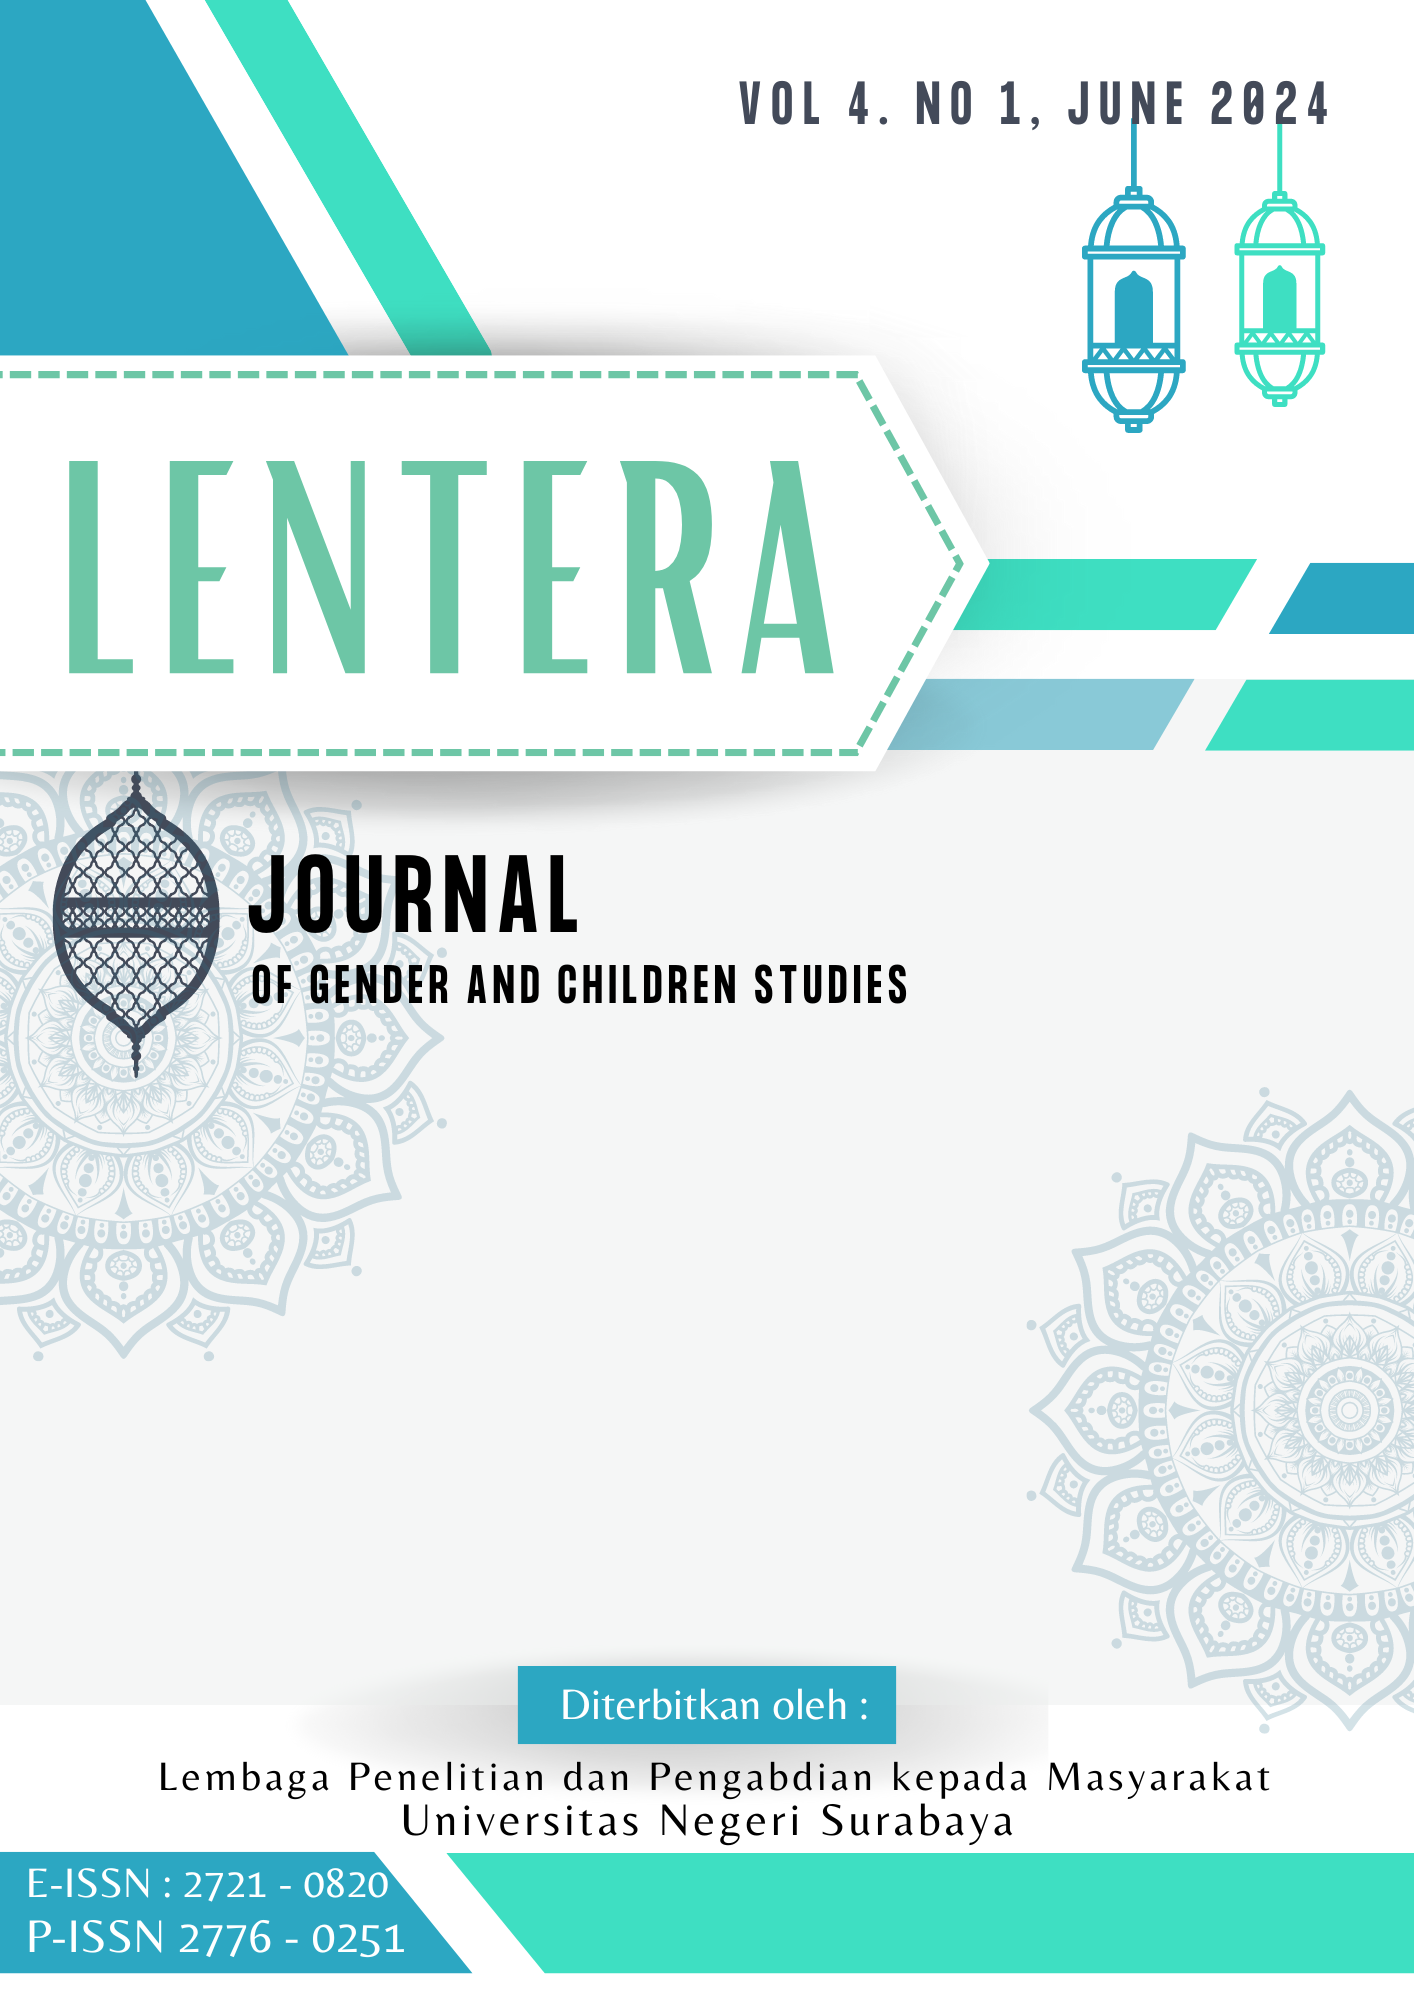 					Lihat Vol 4 No 1 (2024): LENTERA: Journal of Gender and Children Studies ( June 2024)
				